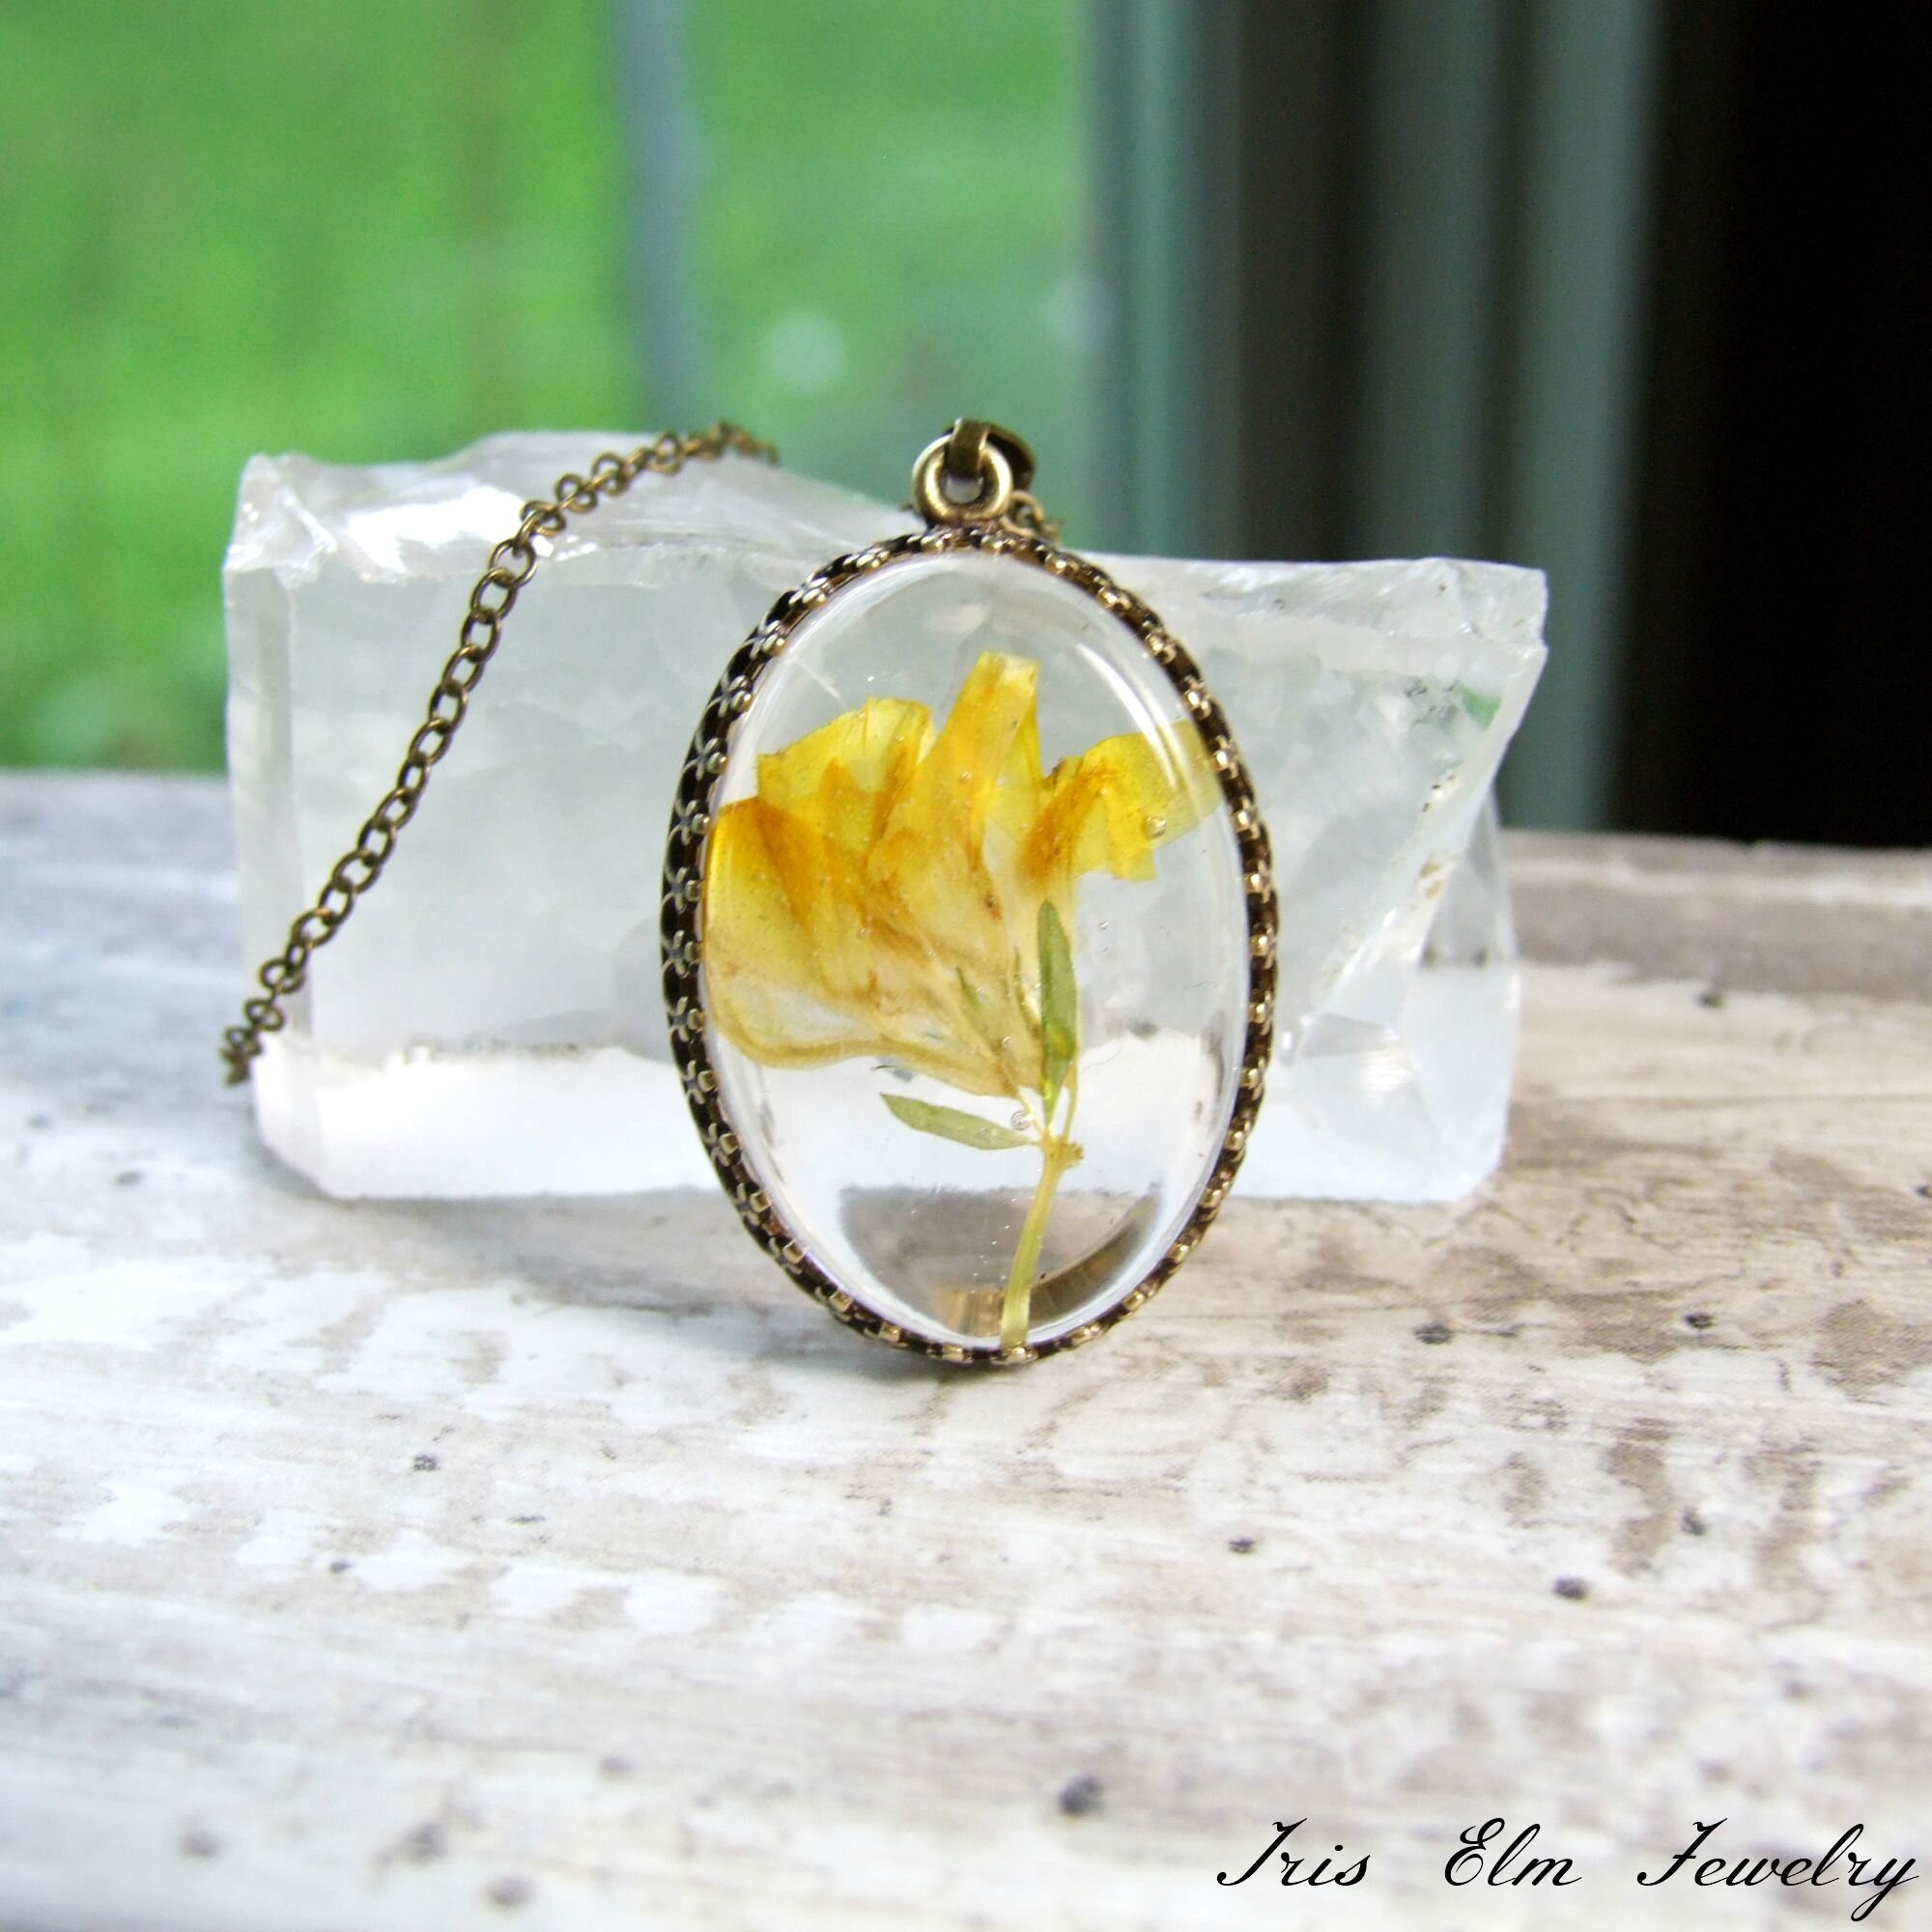 Yellow Trefoil Wildflower Pendant Necklace